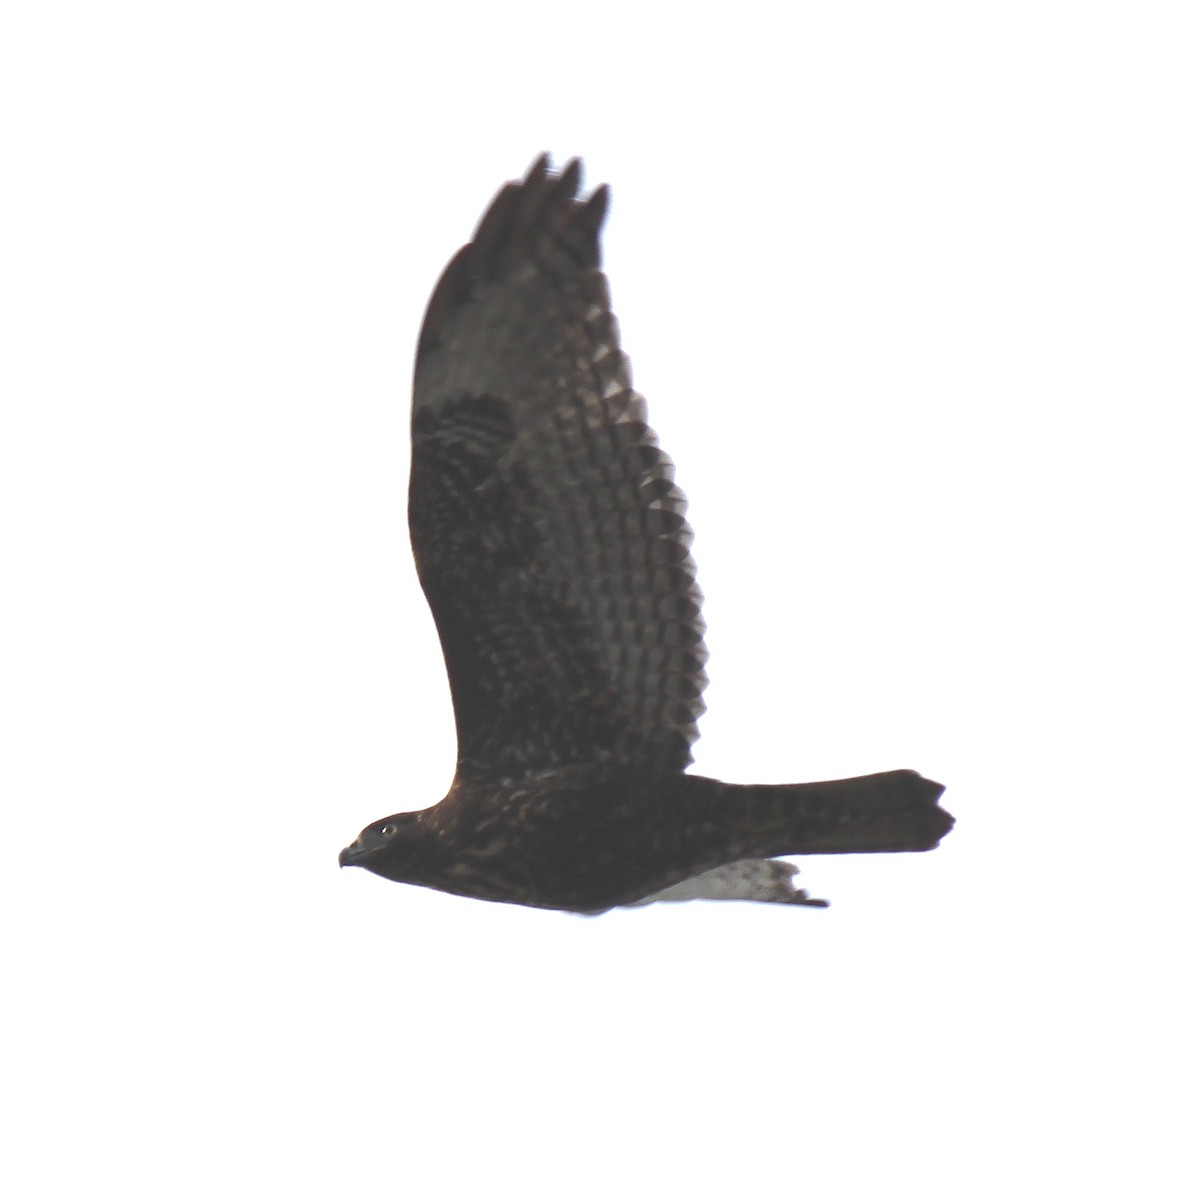 Red-tailed Hawk (Harlan's) - Philip Kline